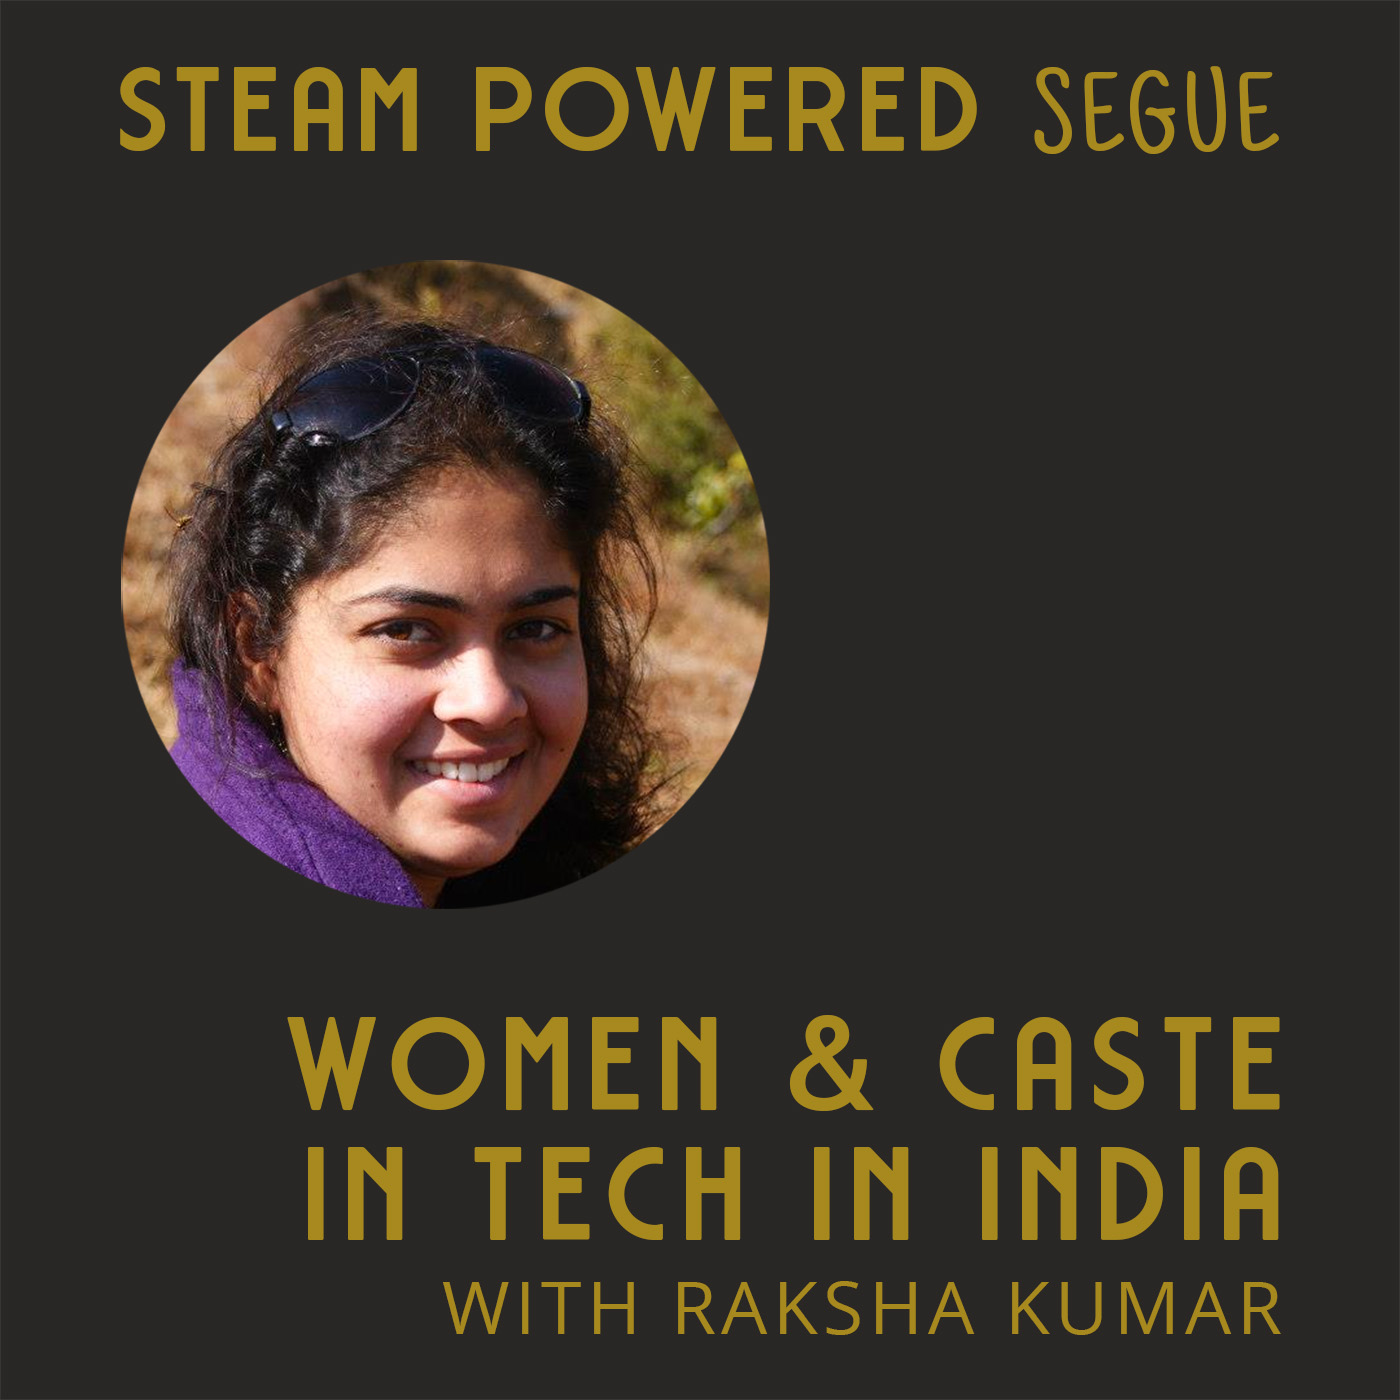 Segue: Women and caste in tech in India with Raksha Kumar